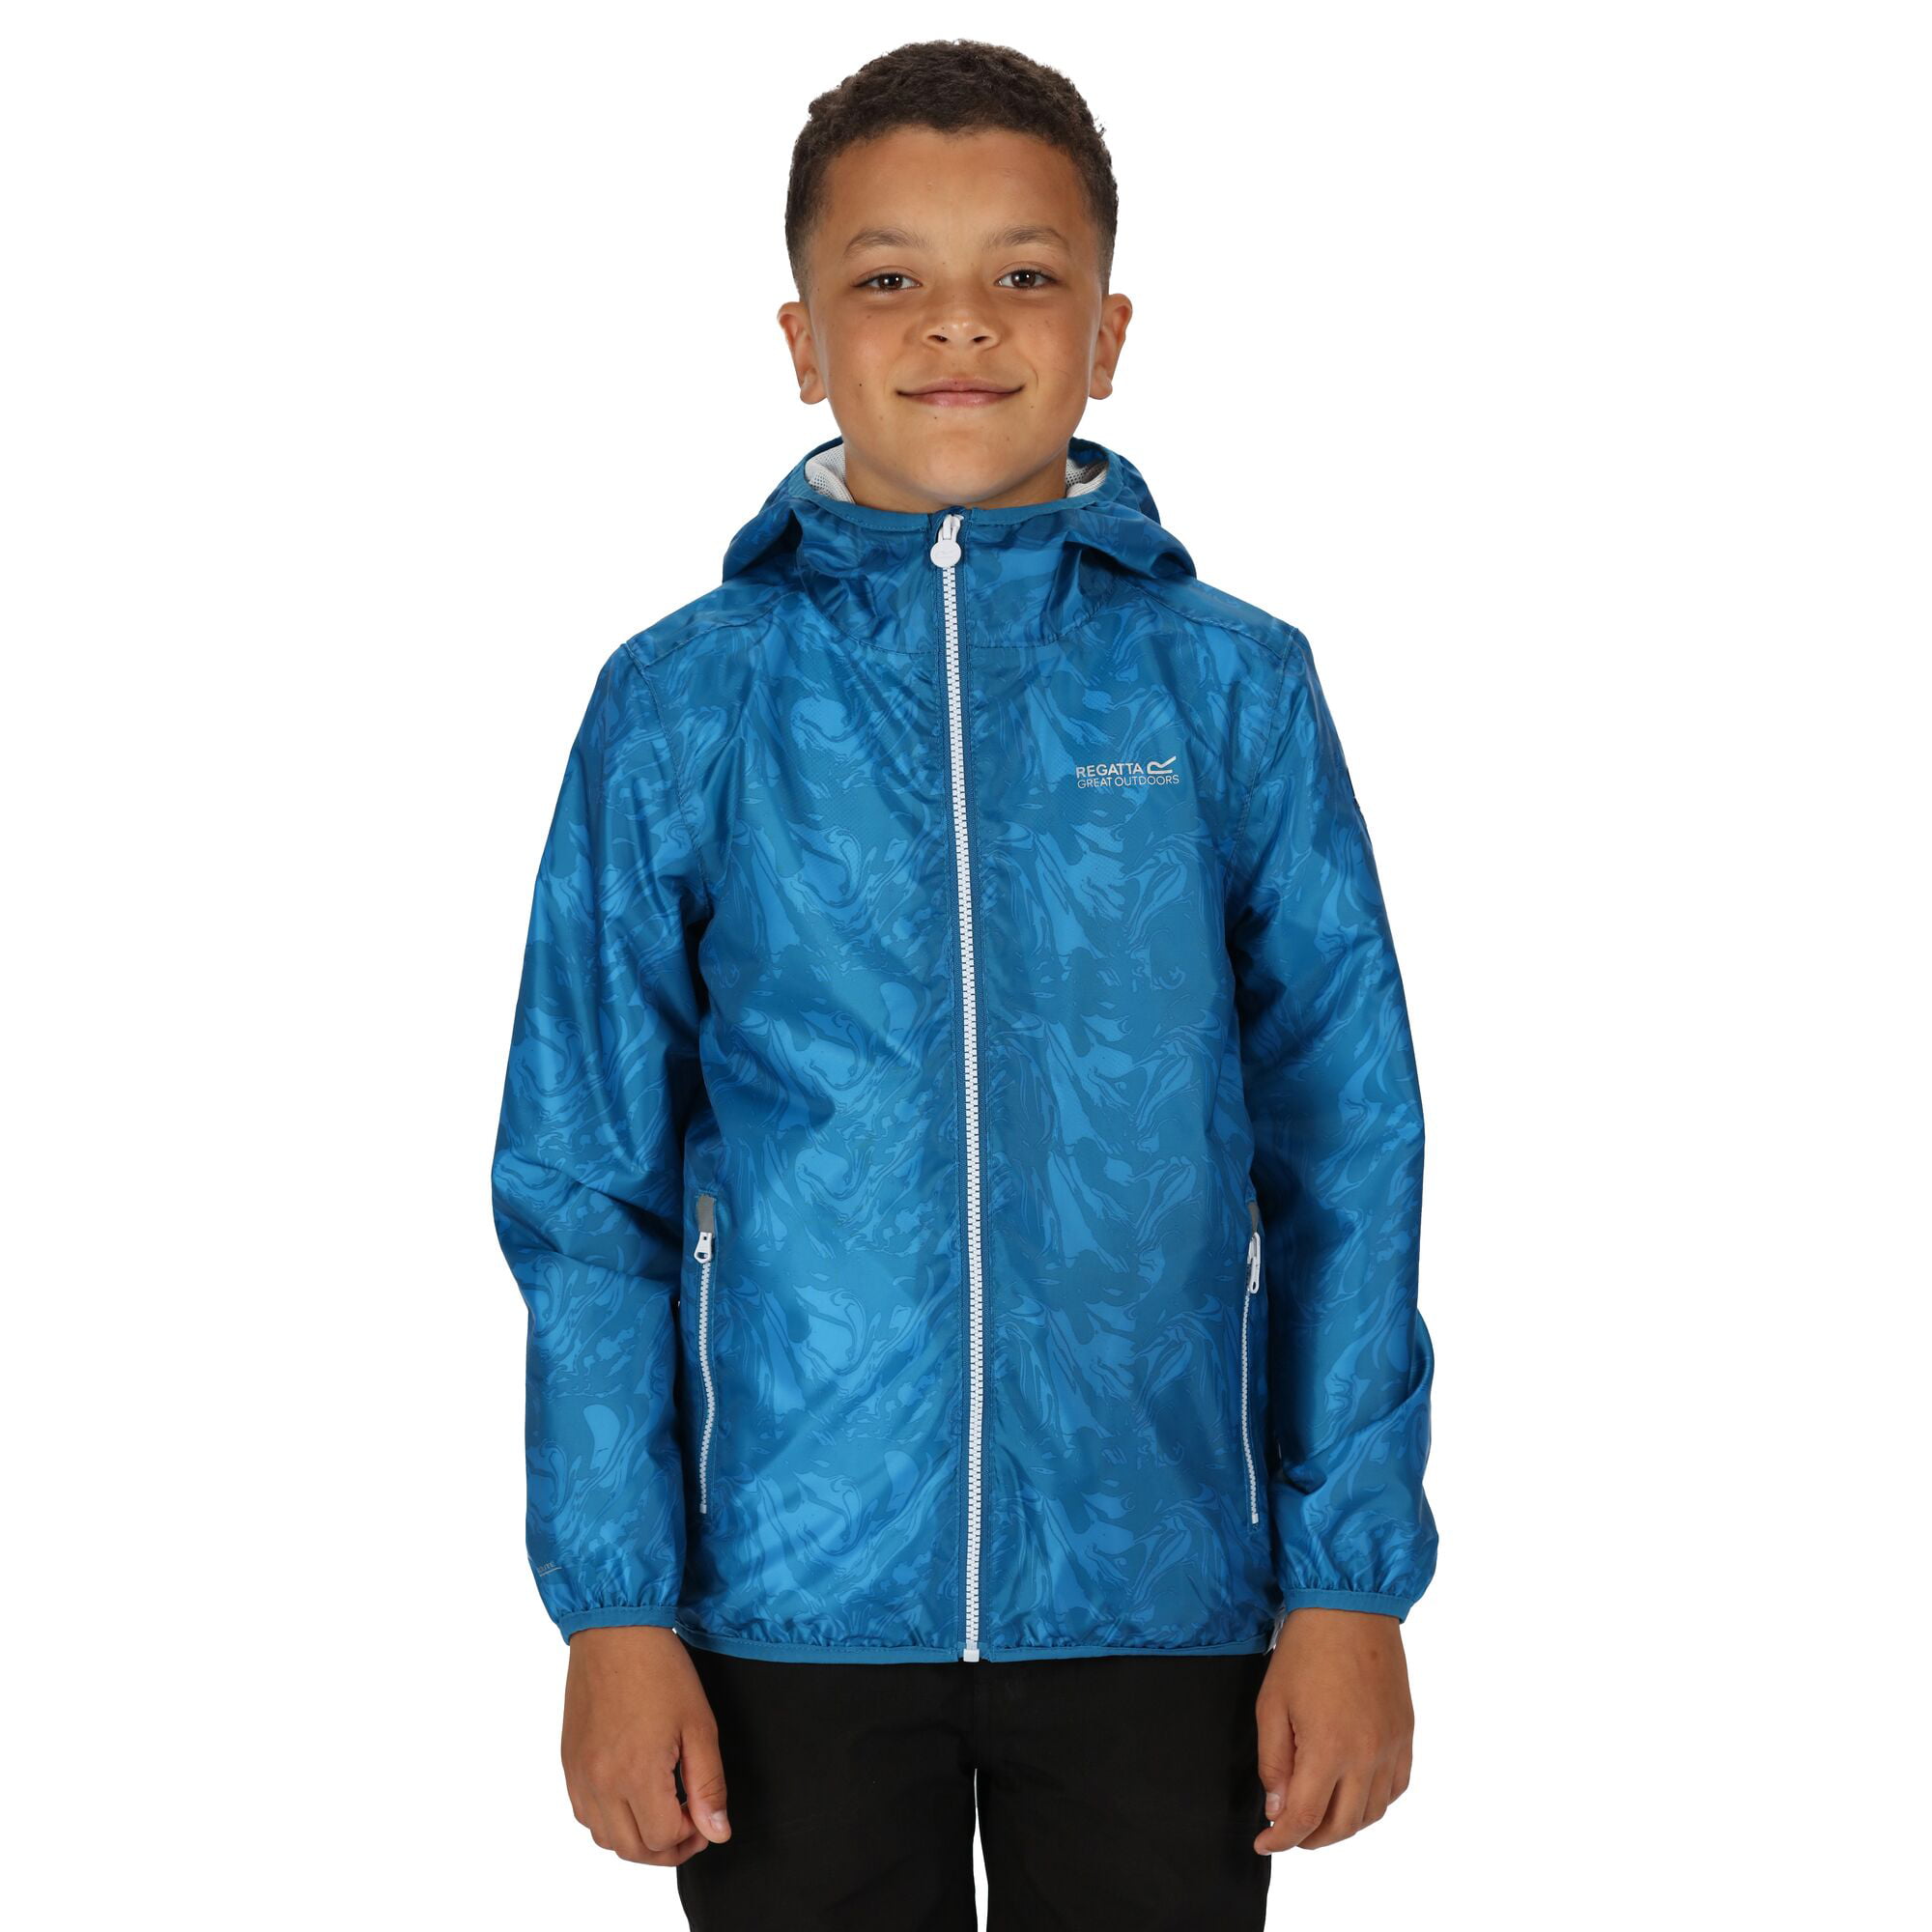 Regatta Boys Printed Lever Jacket Top Blue Sports Outdoors Waterproof 